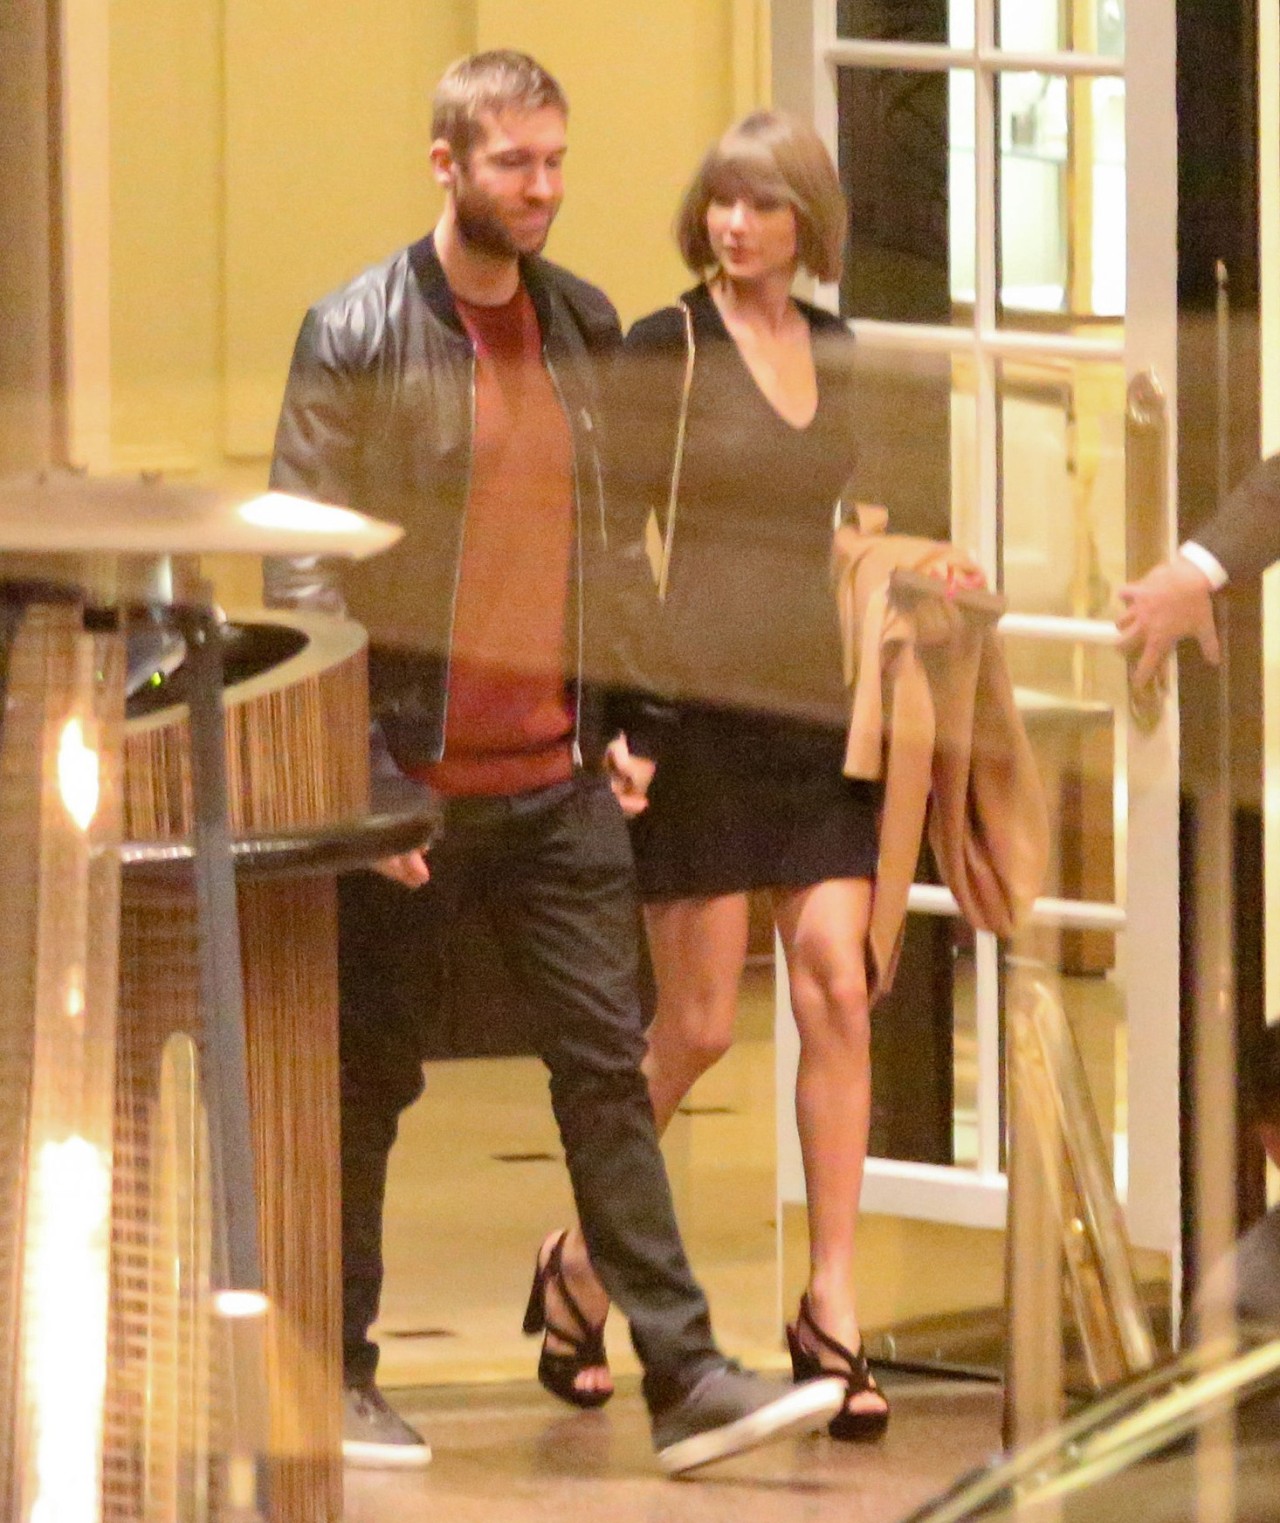 ohsoswiftly:
“ Taylor Swift and Calvin Harris dinner date at Beverly Wilshire hotel
”
Aaaaaahhhhhhhhhhhh